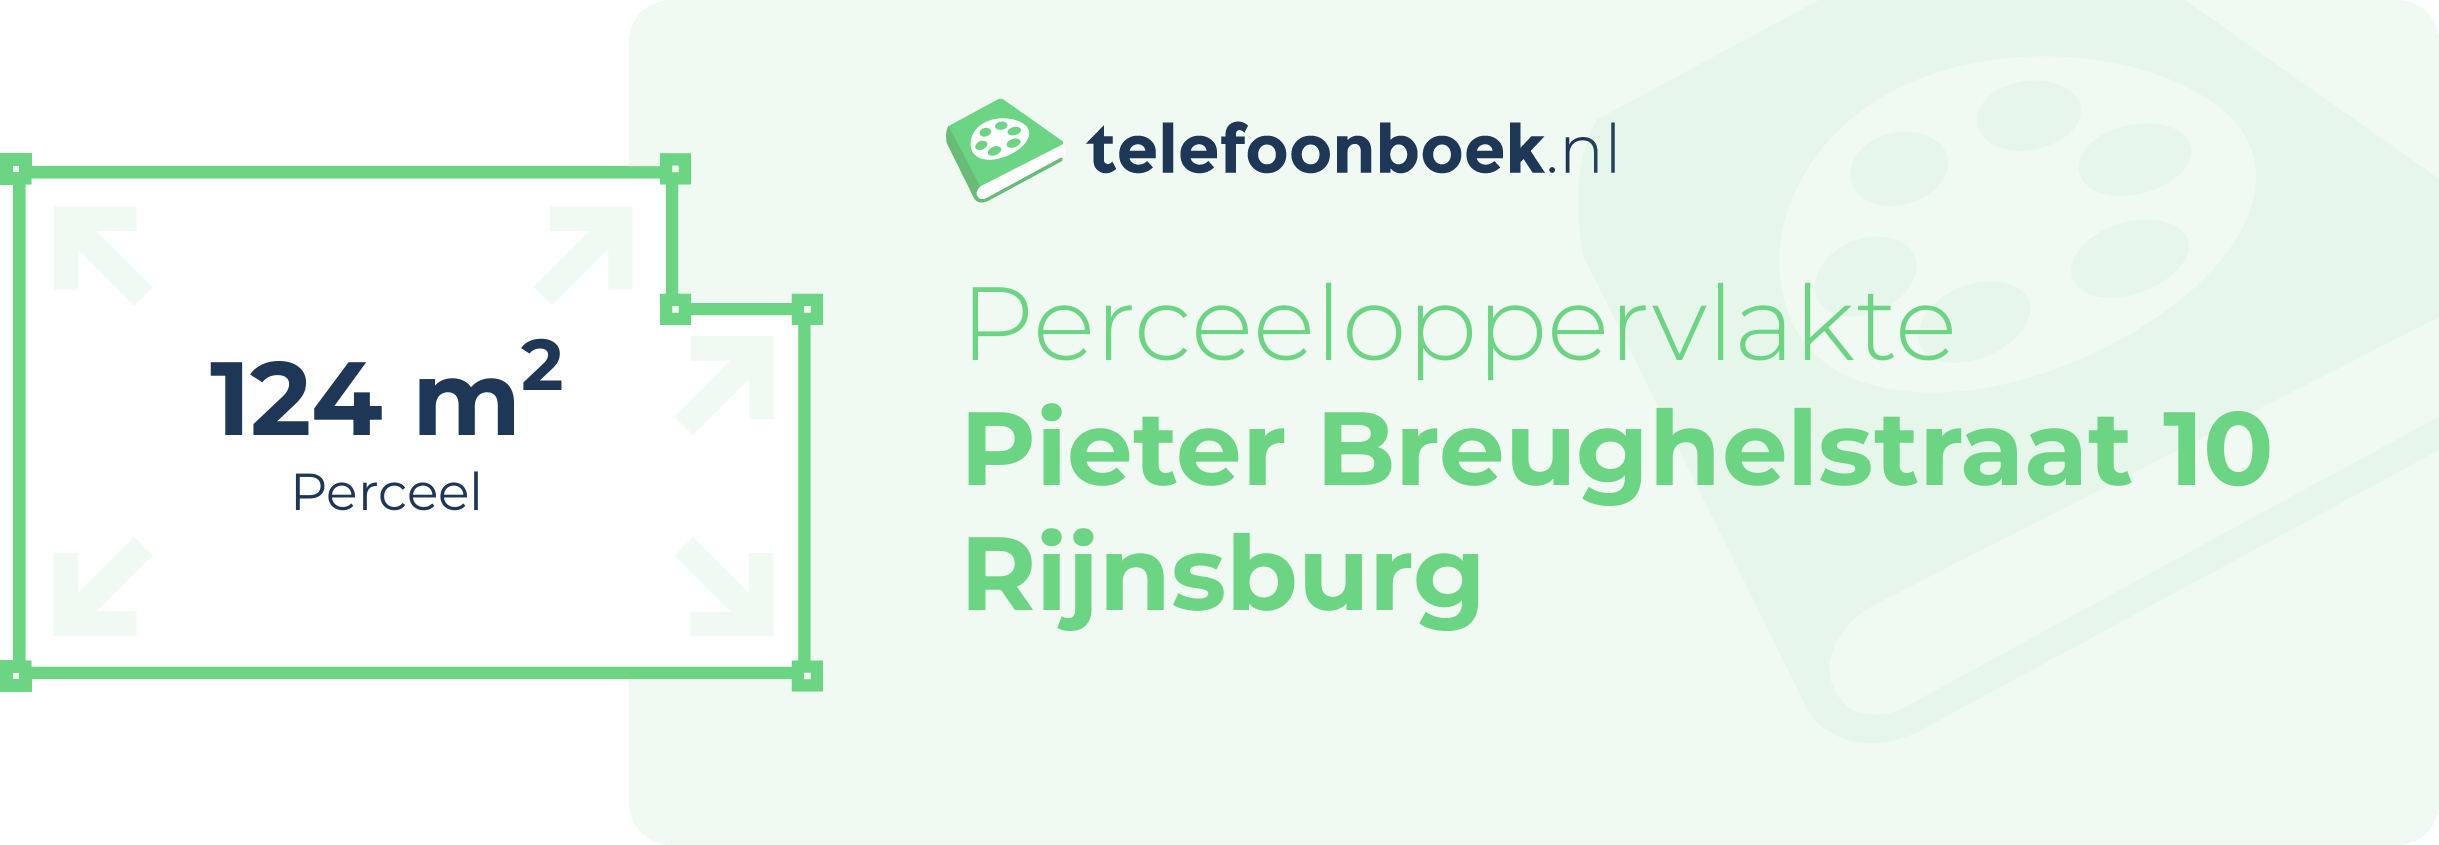 Perceeloppervlakte Pieter Breughelstraat 10 Rijnsburg